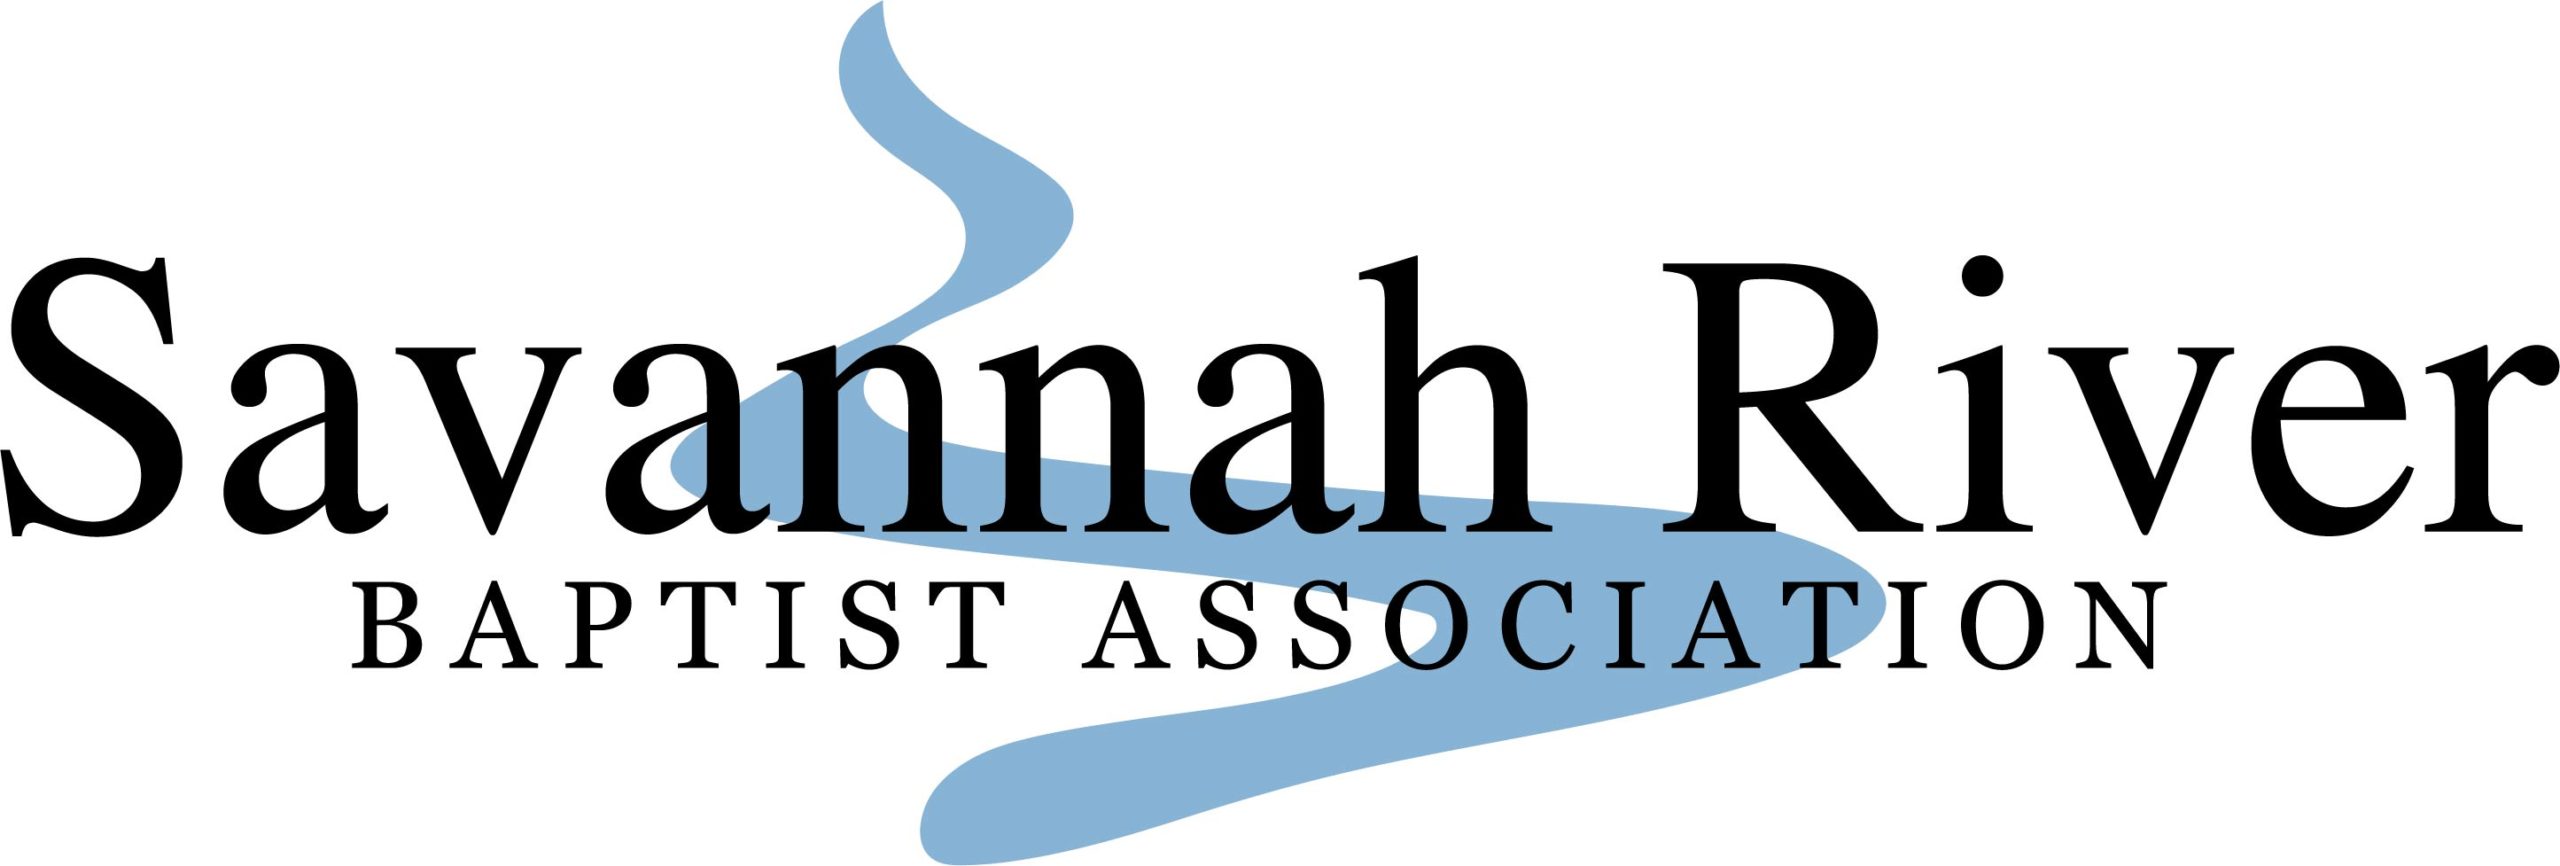 Savannah River Baptist Association